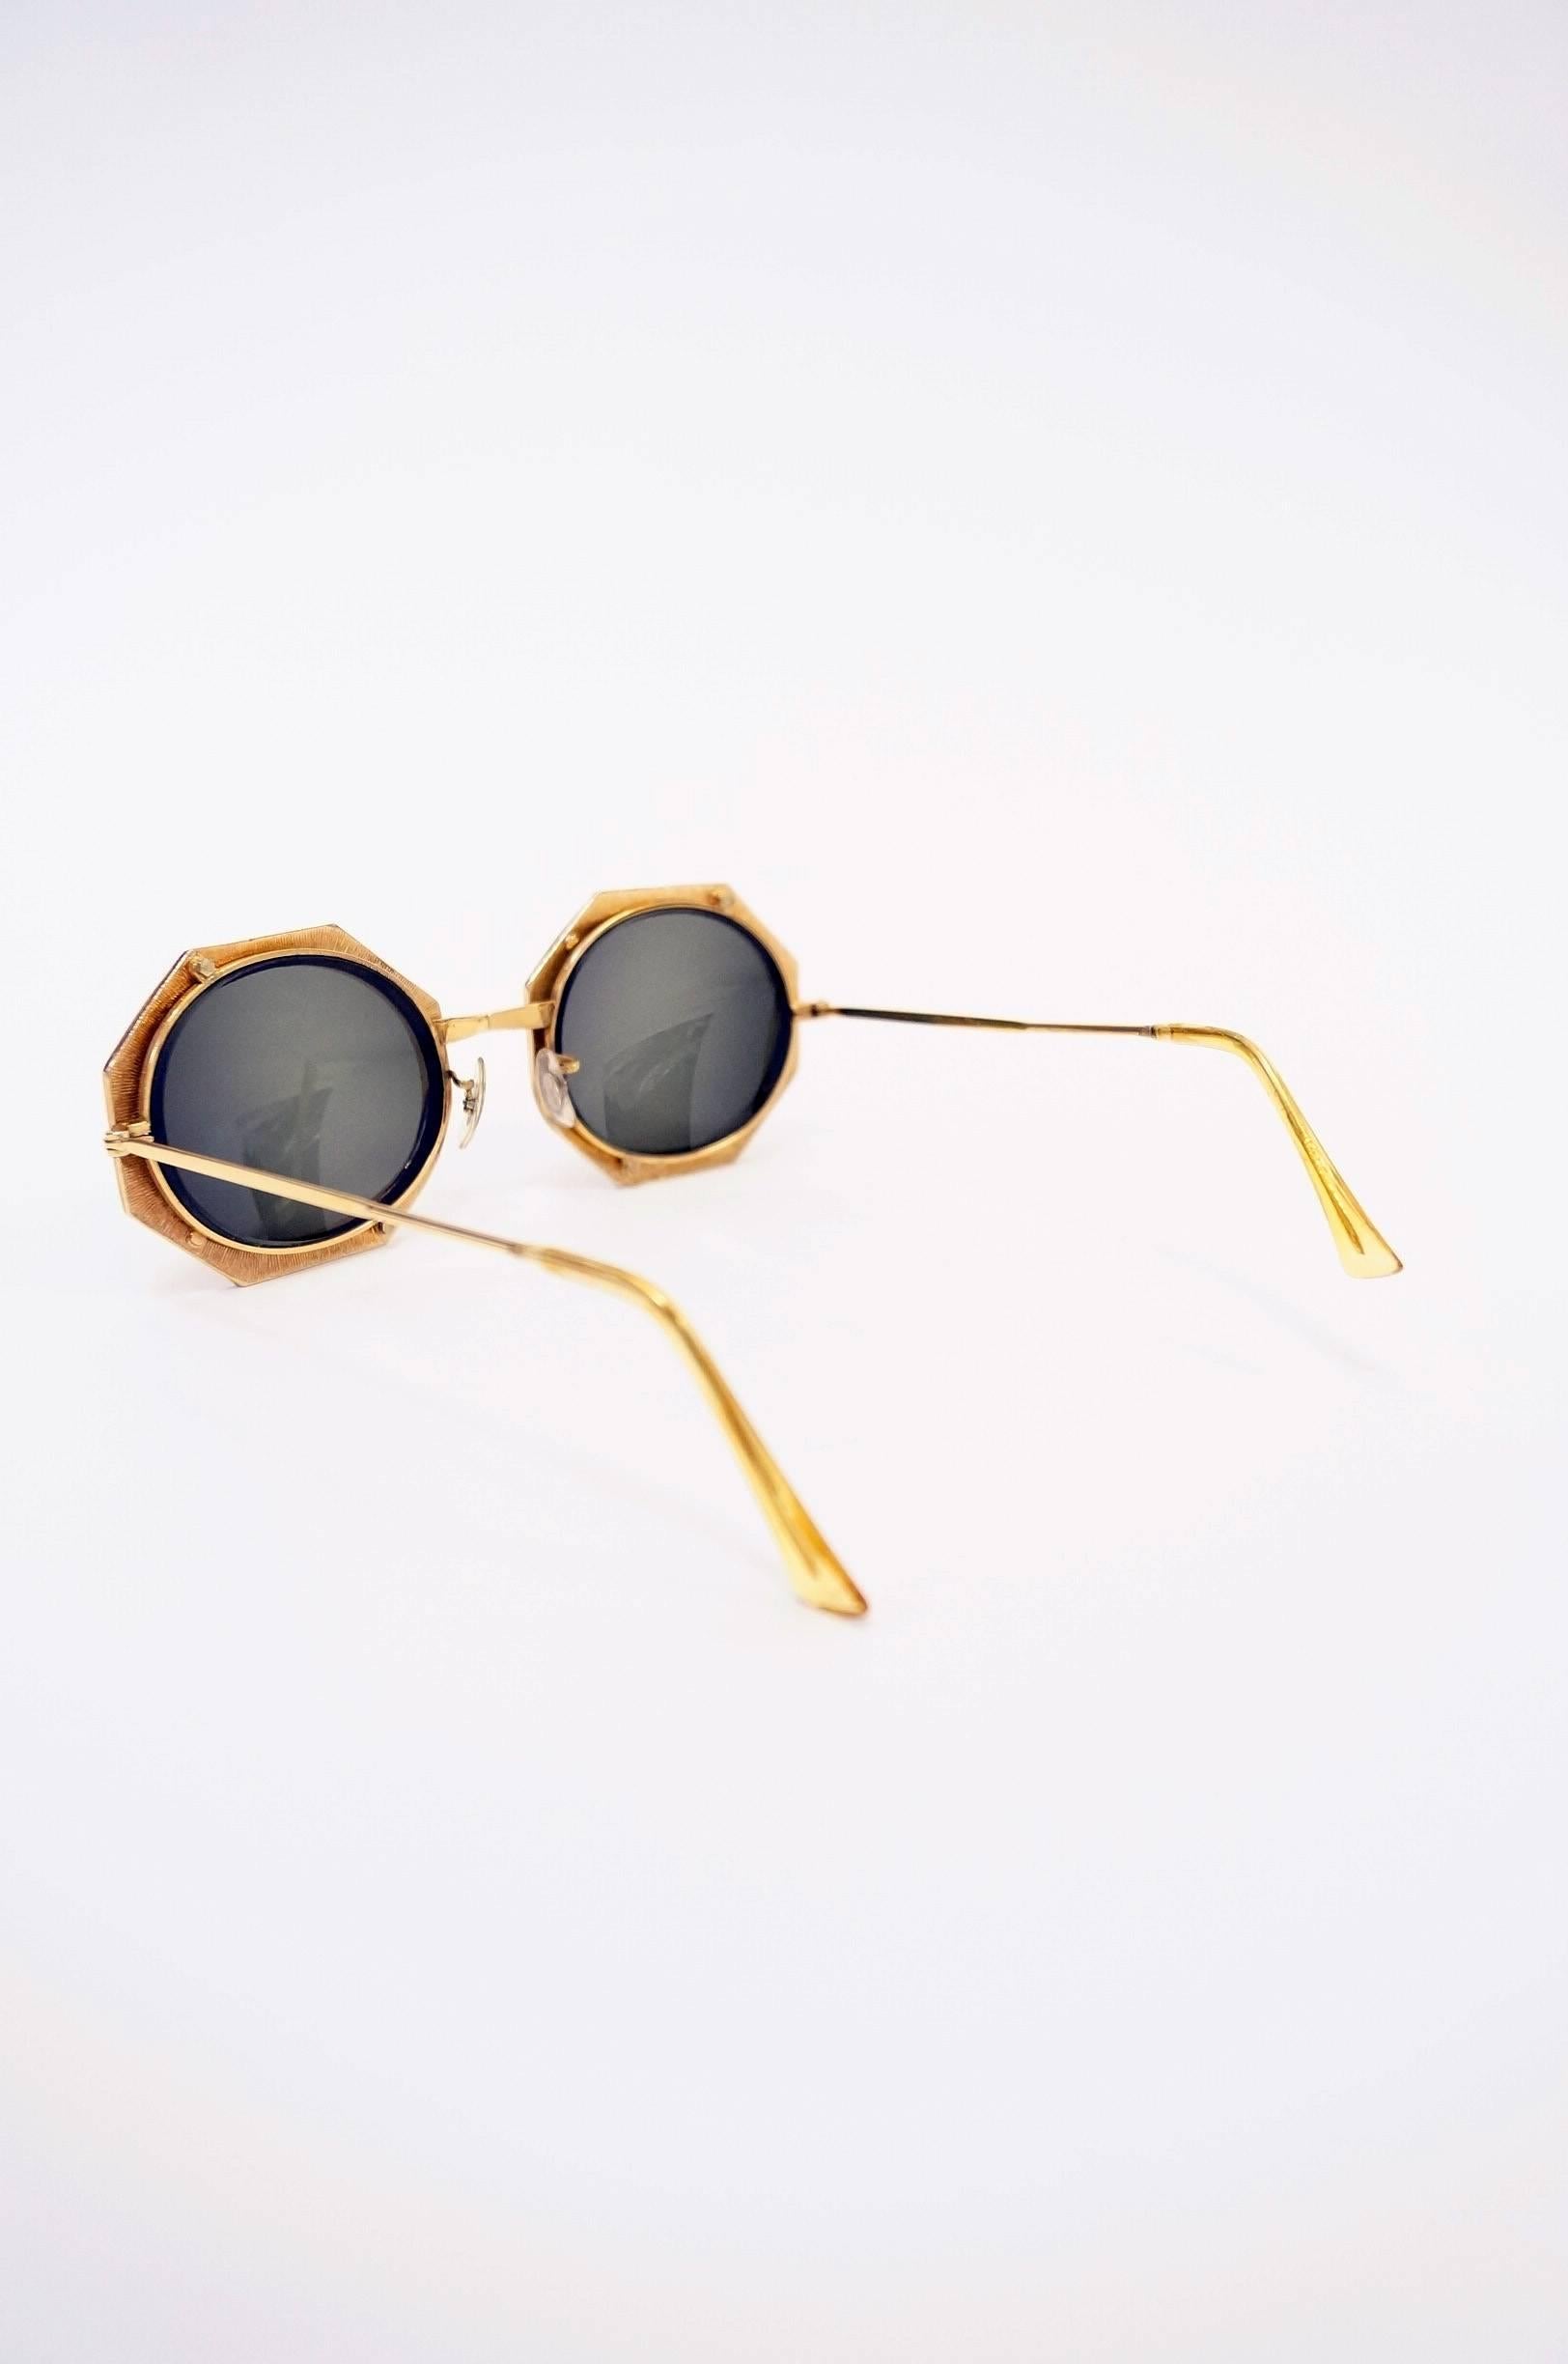 1960s christian dior sunglasses